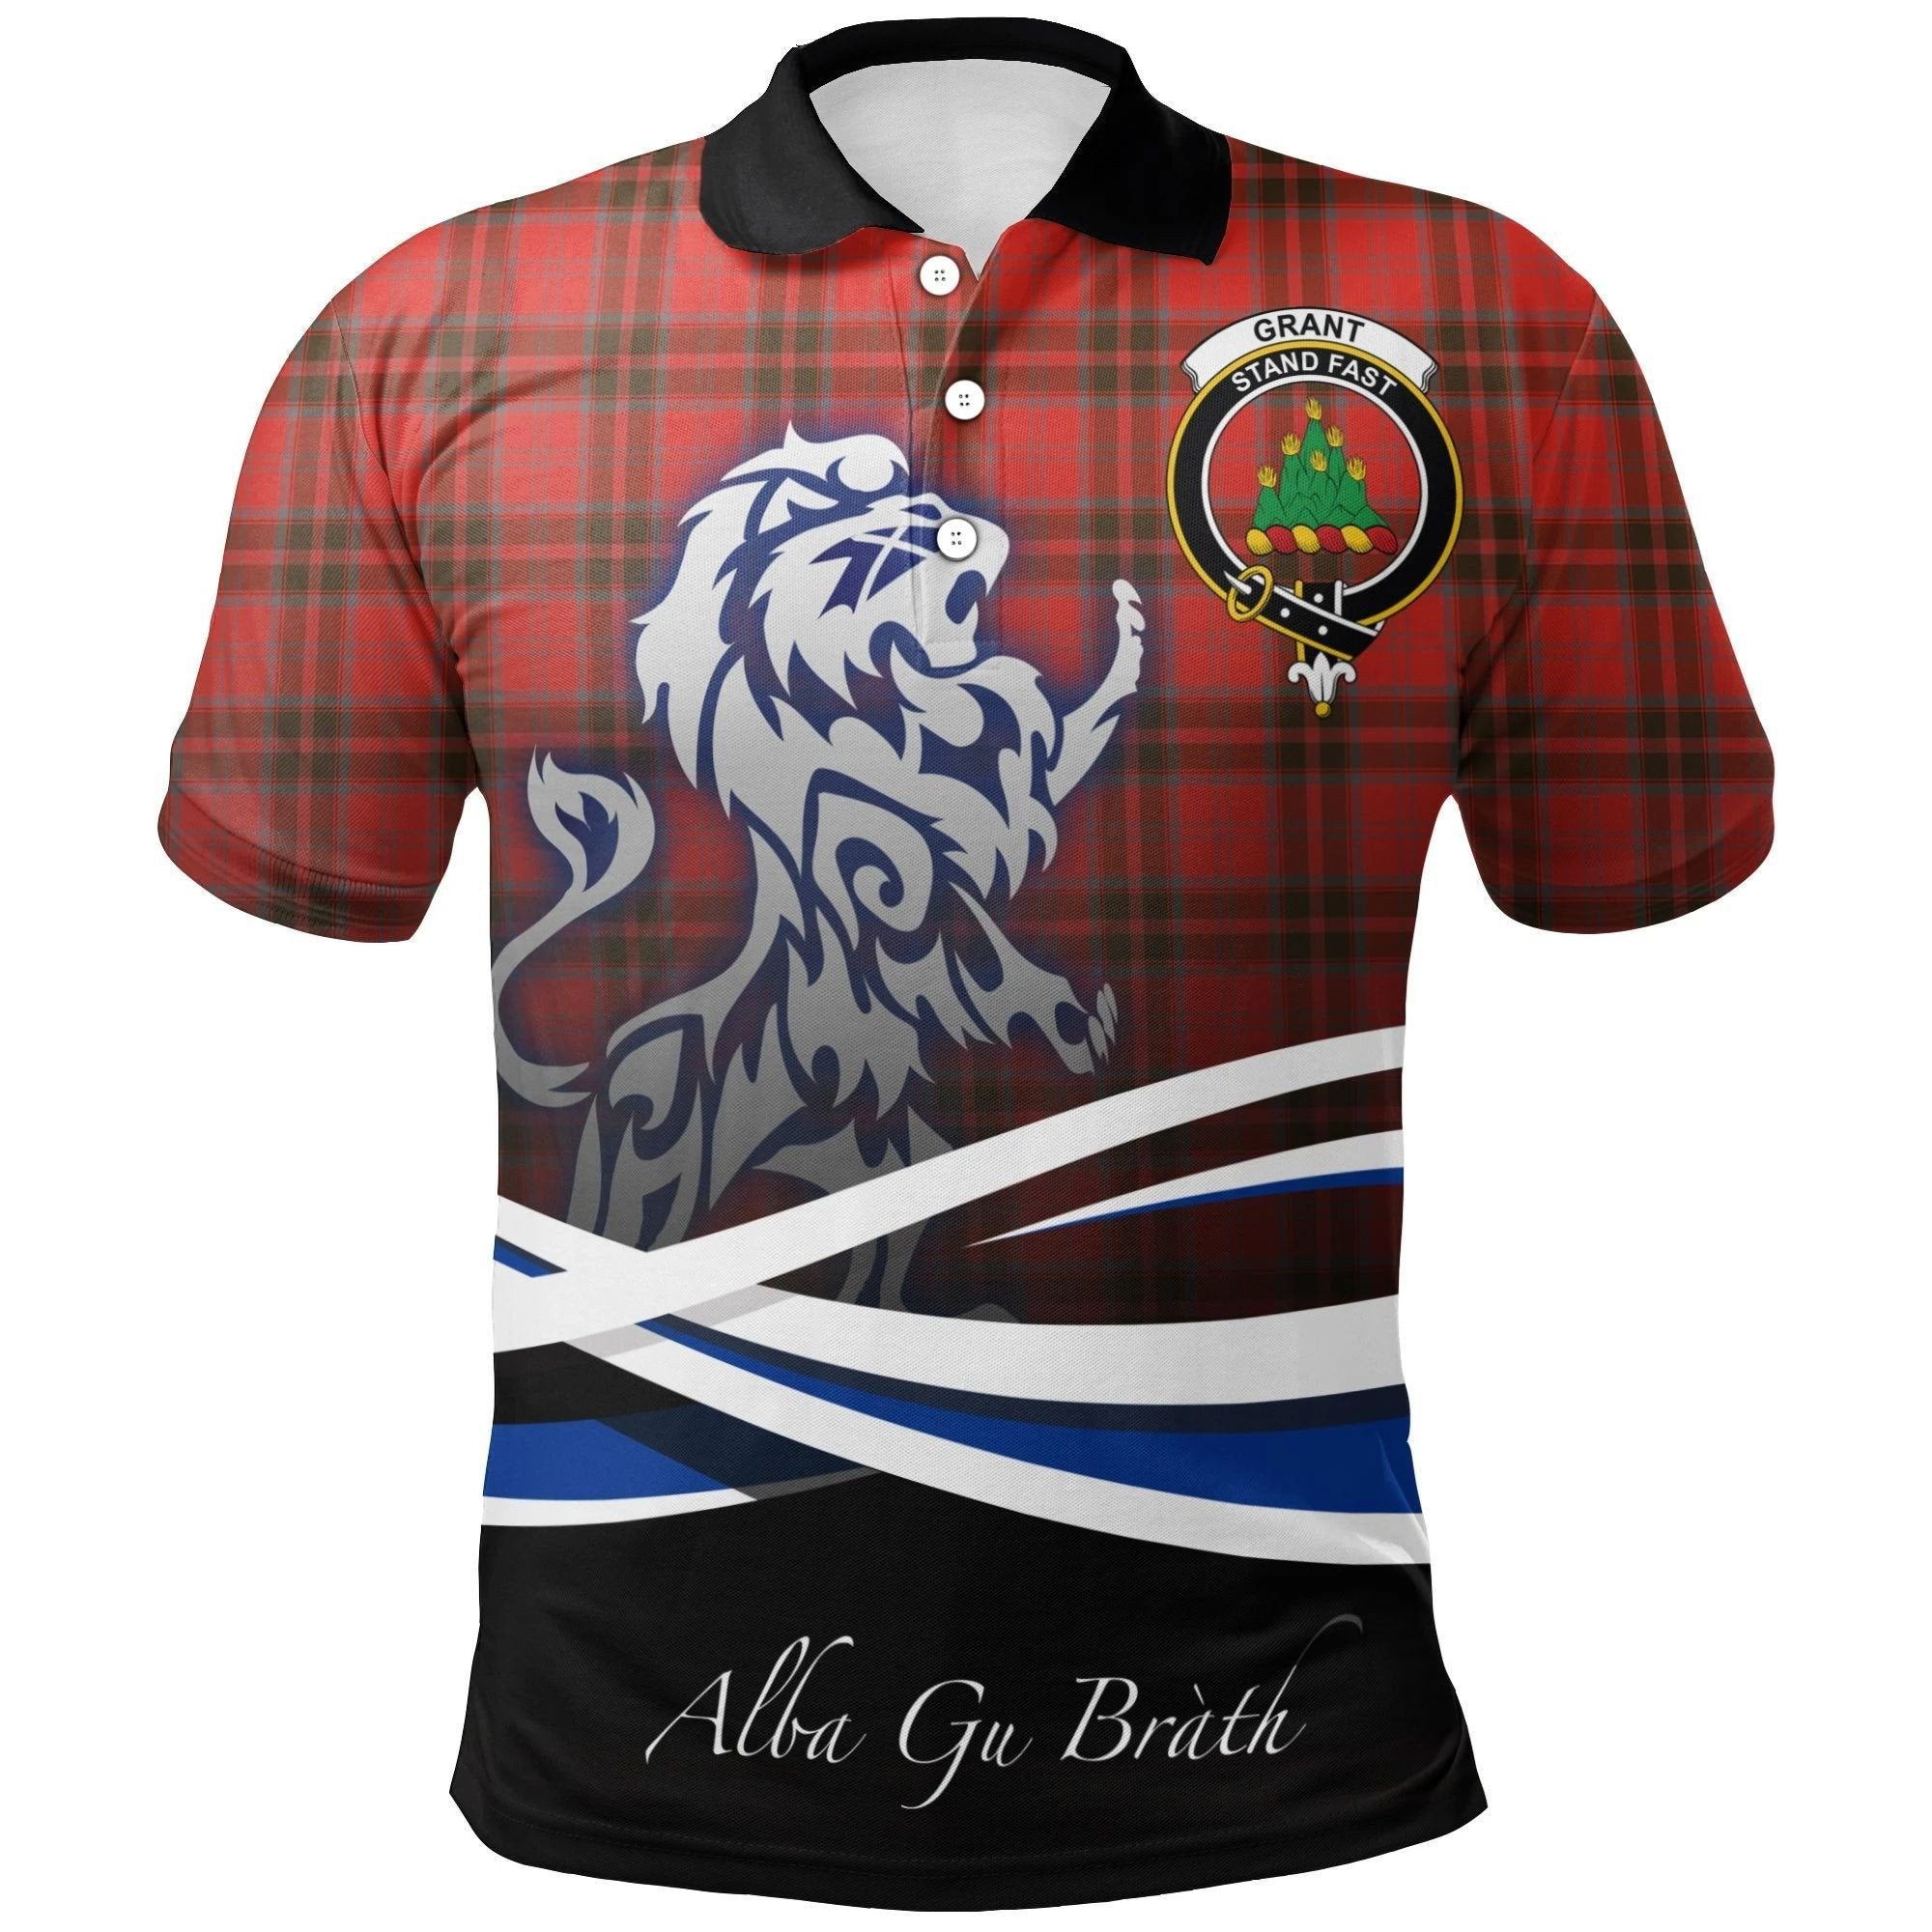 Grant Weathered Clan Polo Shirt, Scottish Tartan Grant Weathered Clans Polo Shirt Crest Lion Style